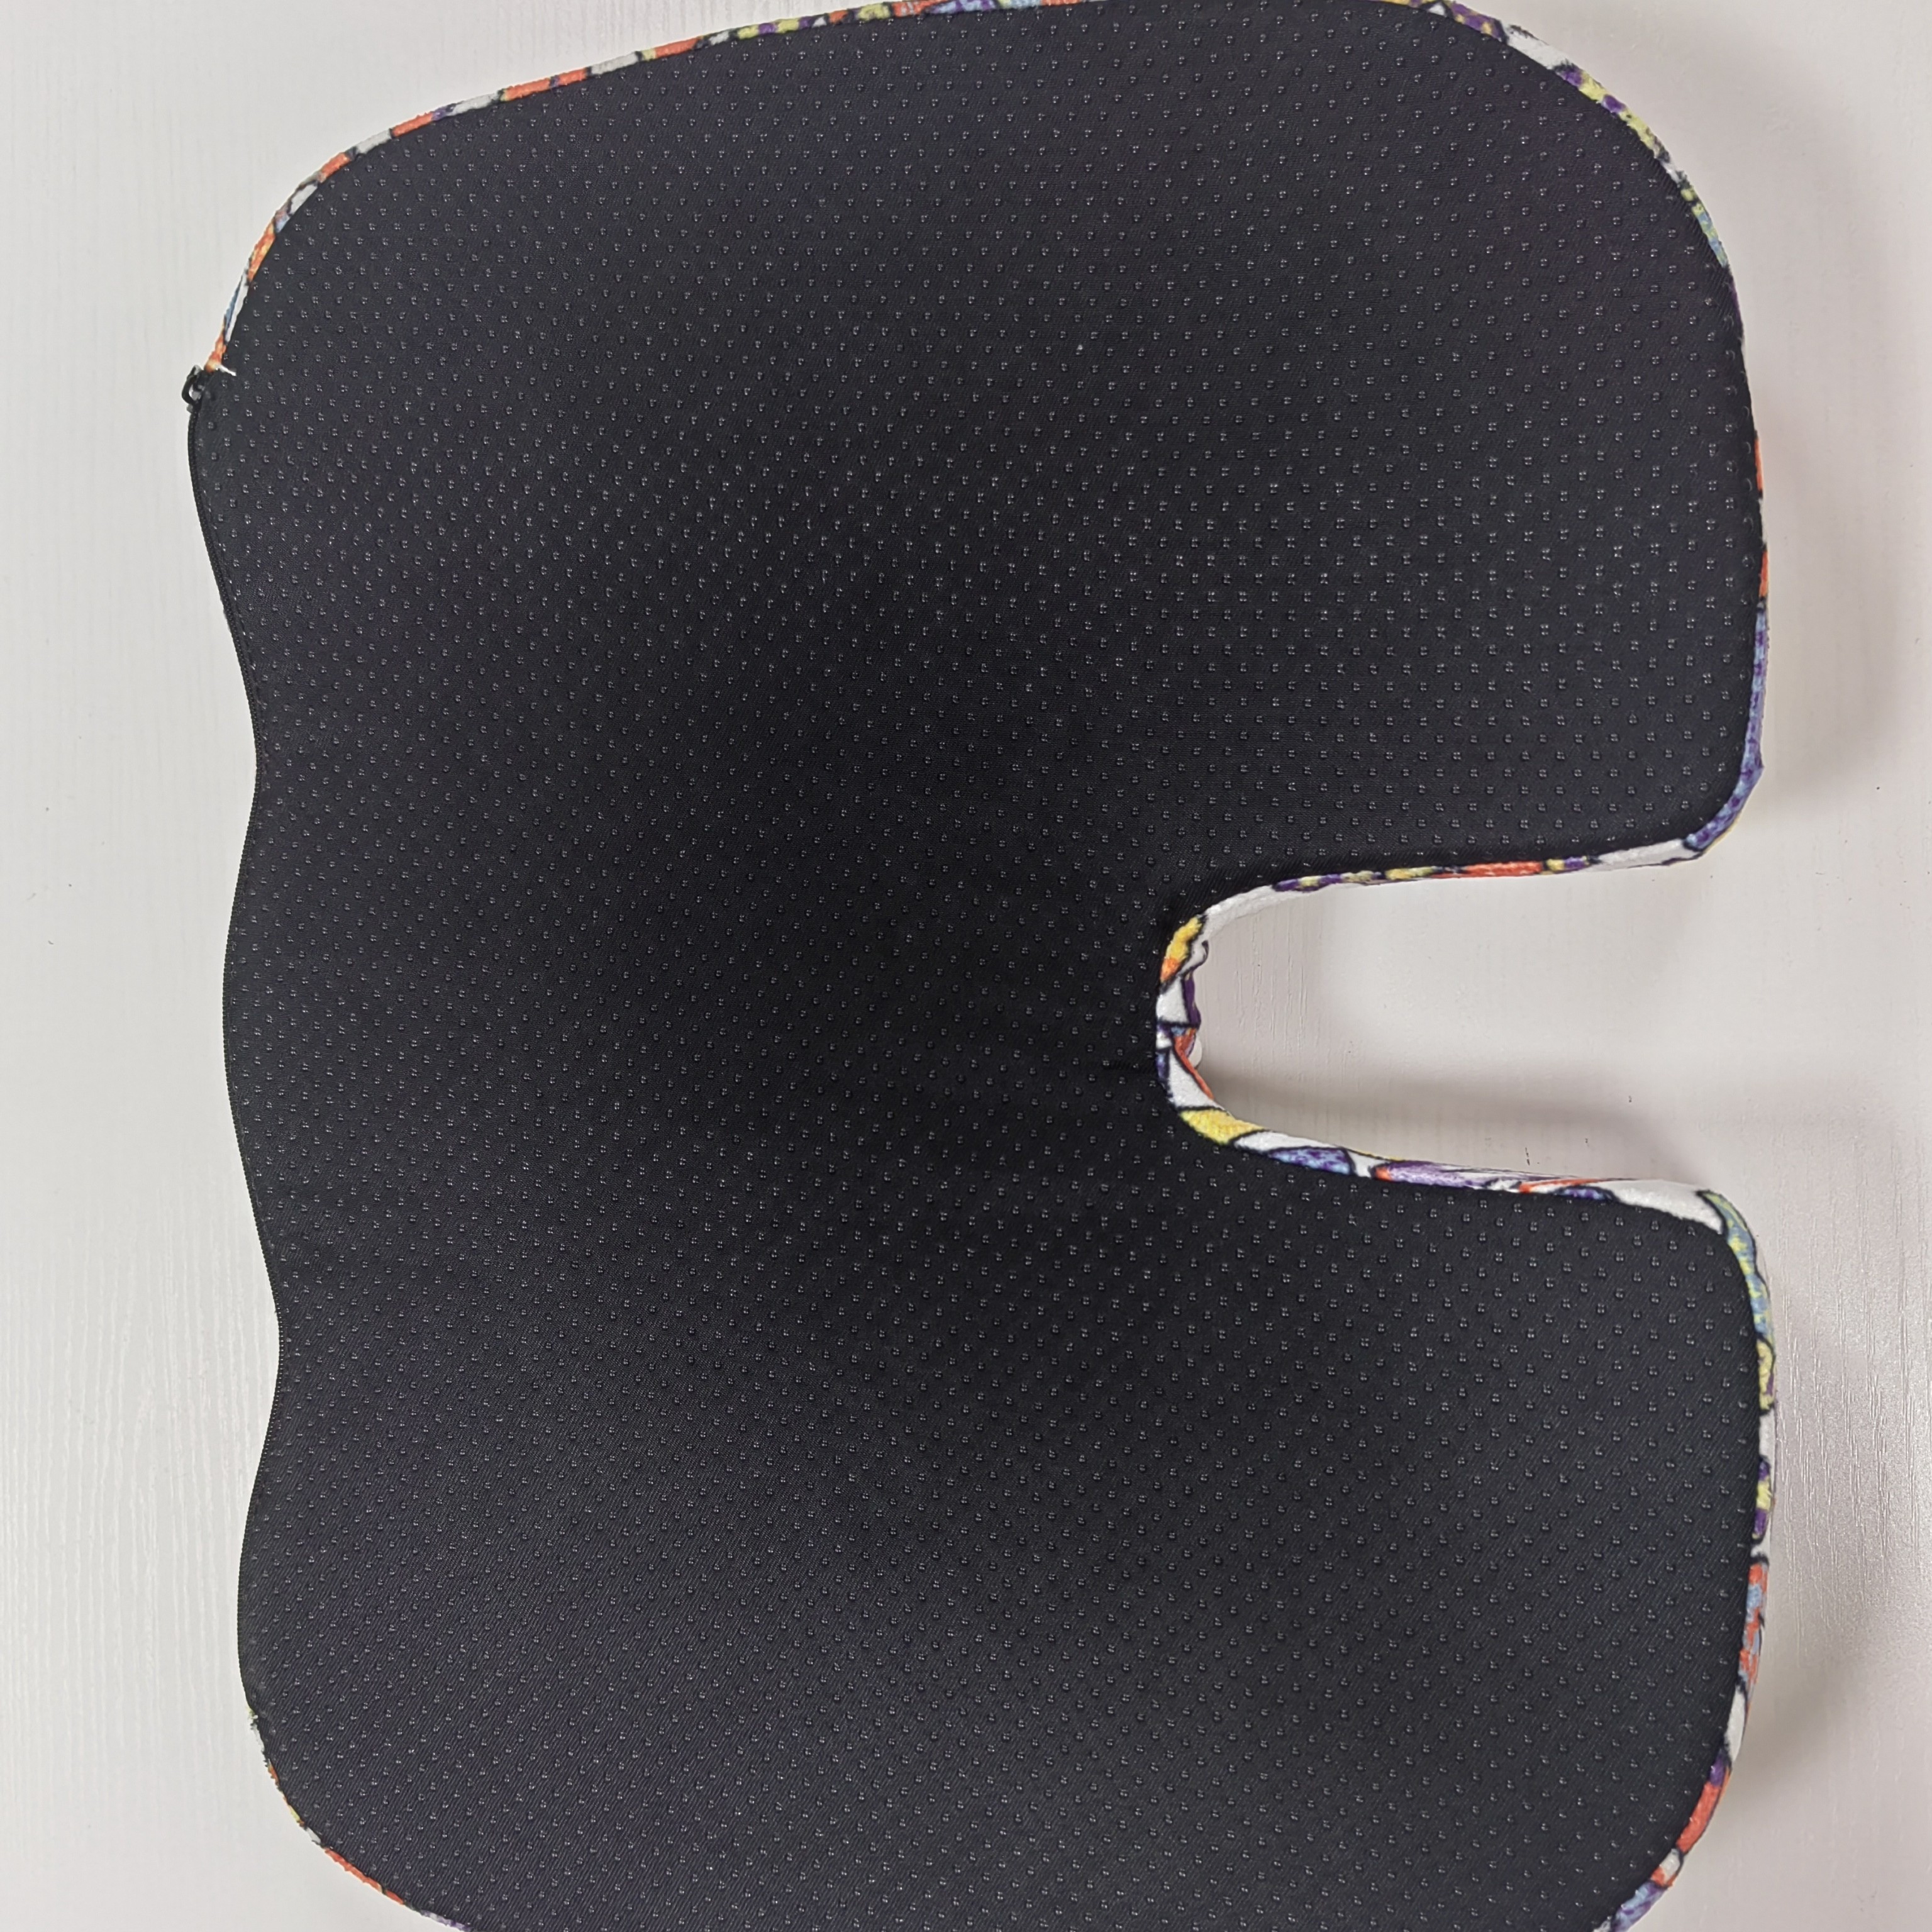 Car Coccyx Seat Cushion Pad For Sciatica Tailbone Pain Relief